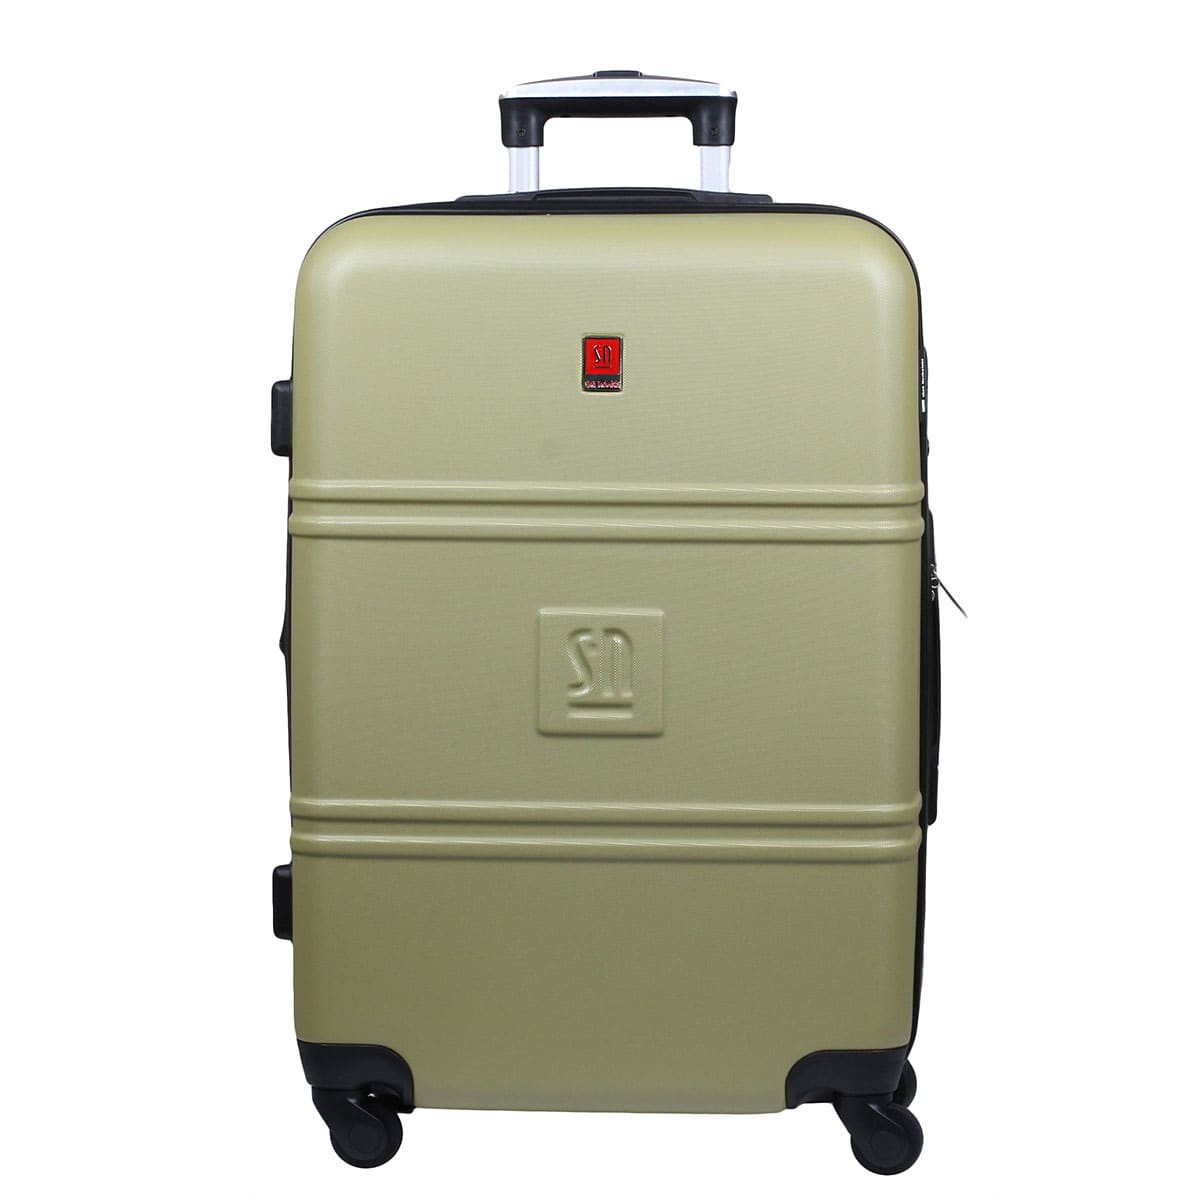 zielona-walizka-podrozna-srednia-na-kolkach-Art-Class-04-0411O-07.jpg